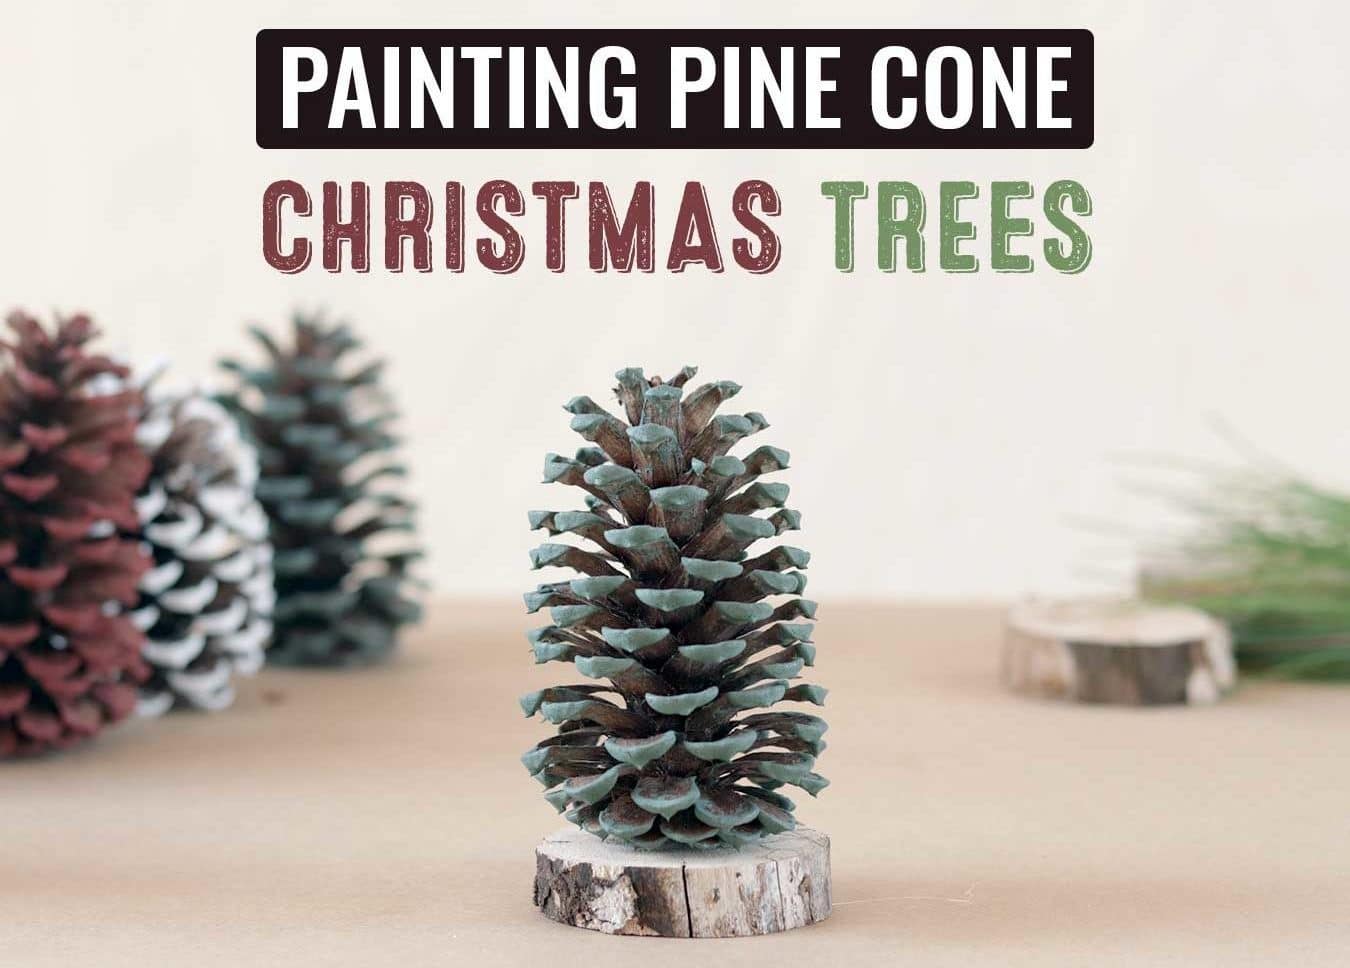 painting pine cone Christmas tree headline with pine cones